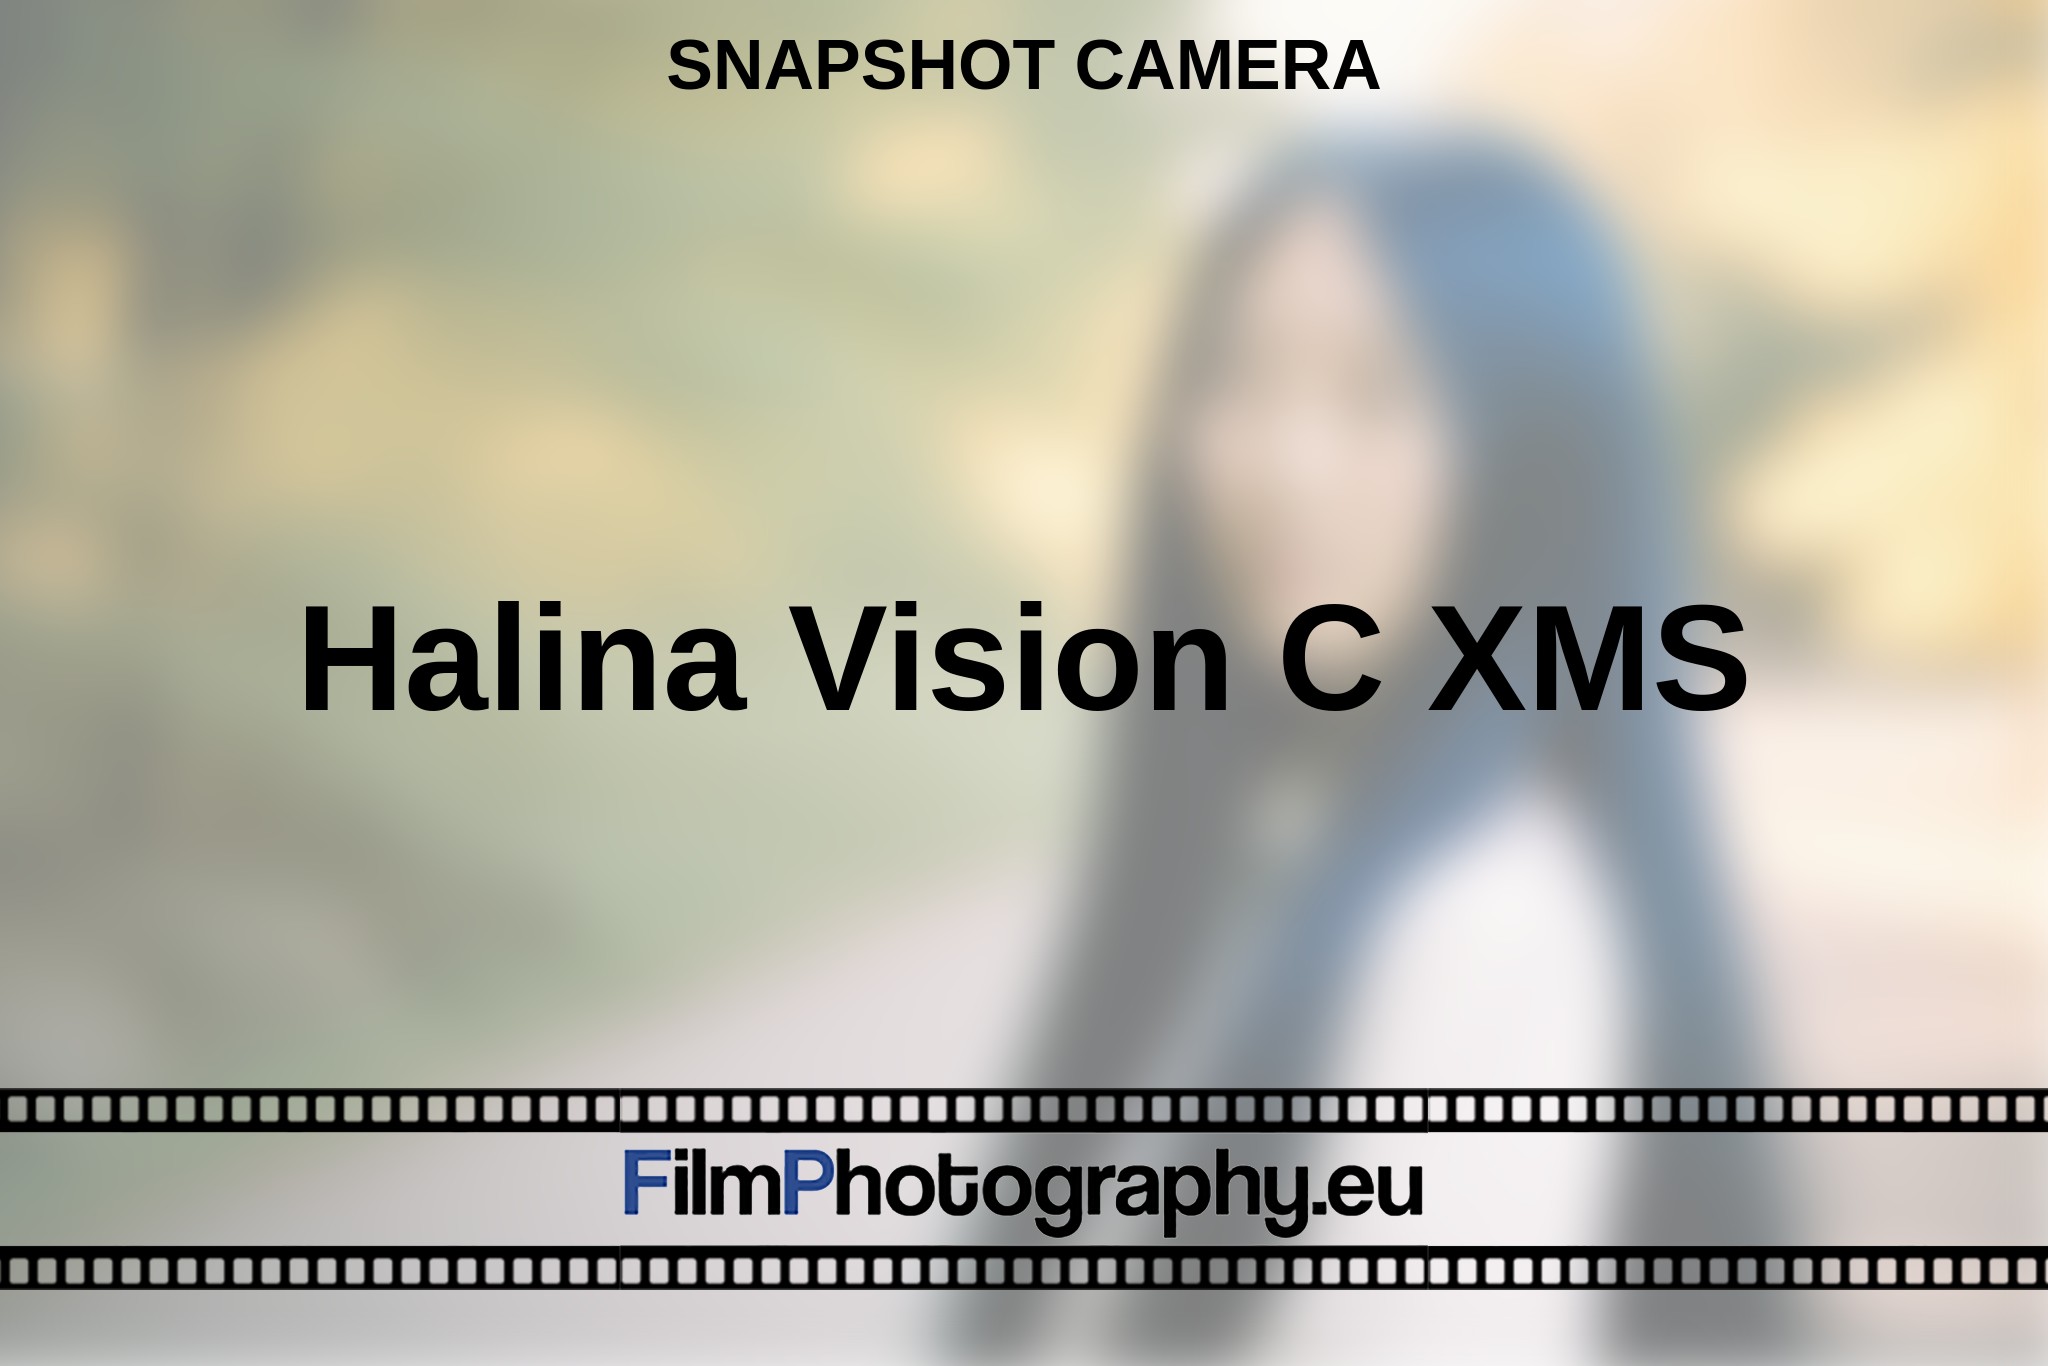 halina-vision-c-xms-snapshot-camera-en-bnv.jpg